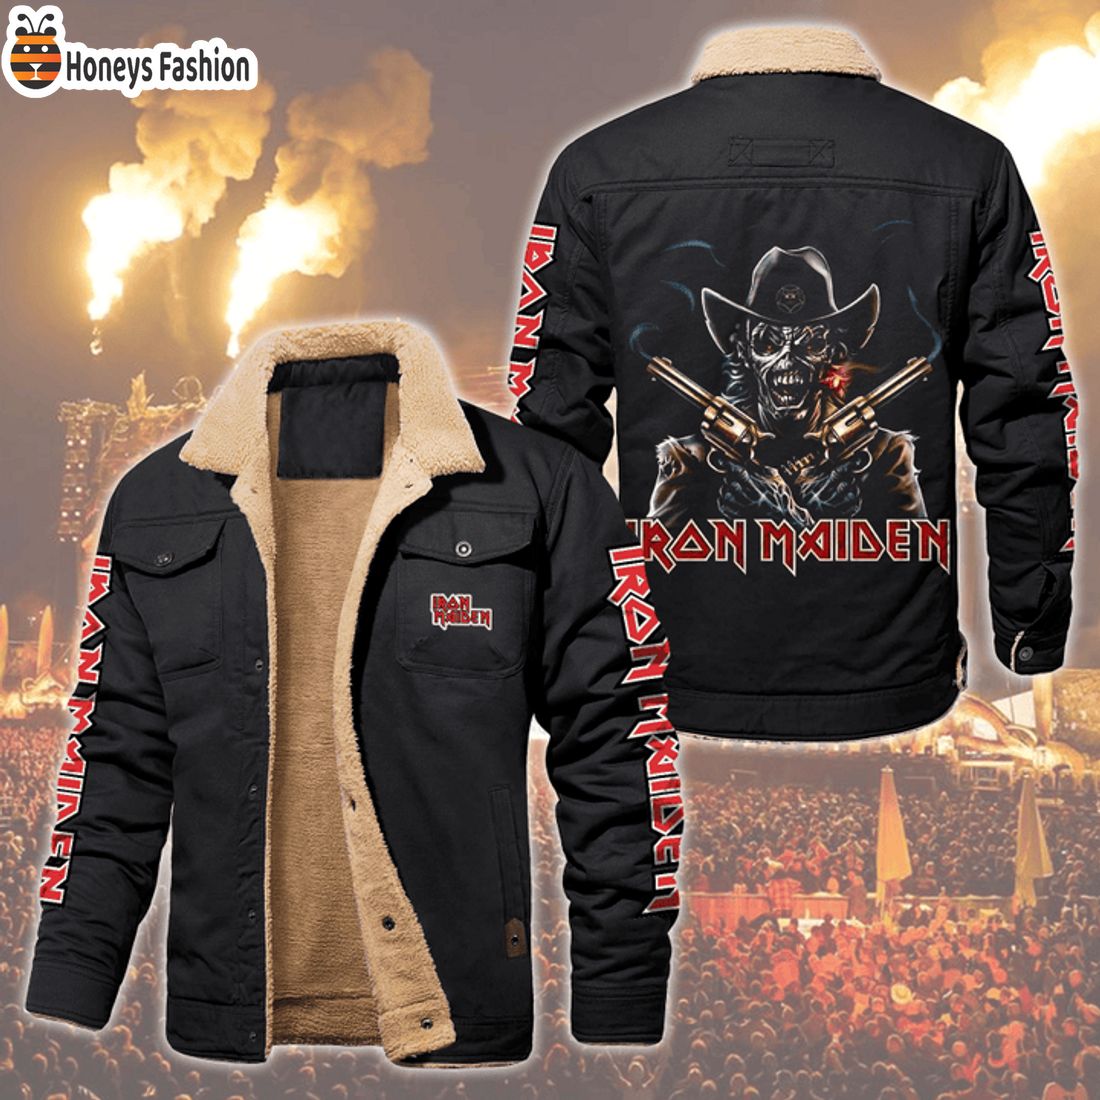 HOT Iron Maiden Zombie Gunslinger Fleece Leather Jacket